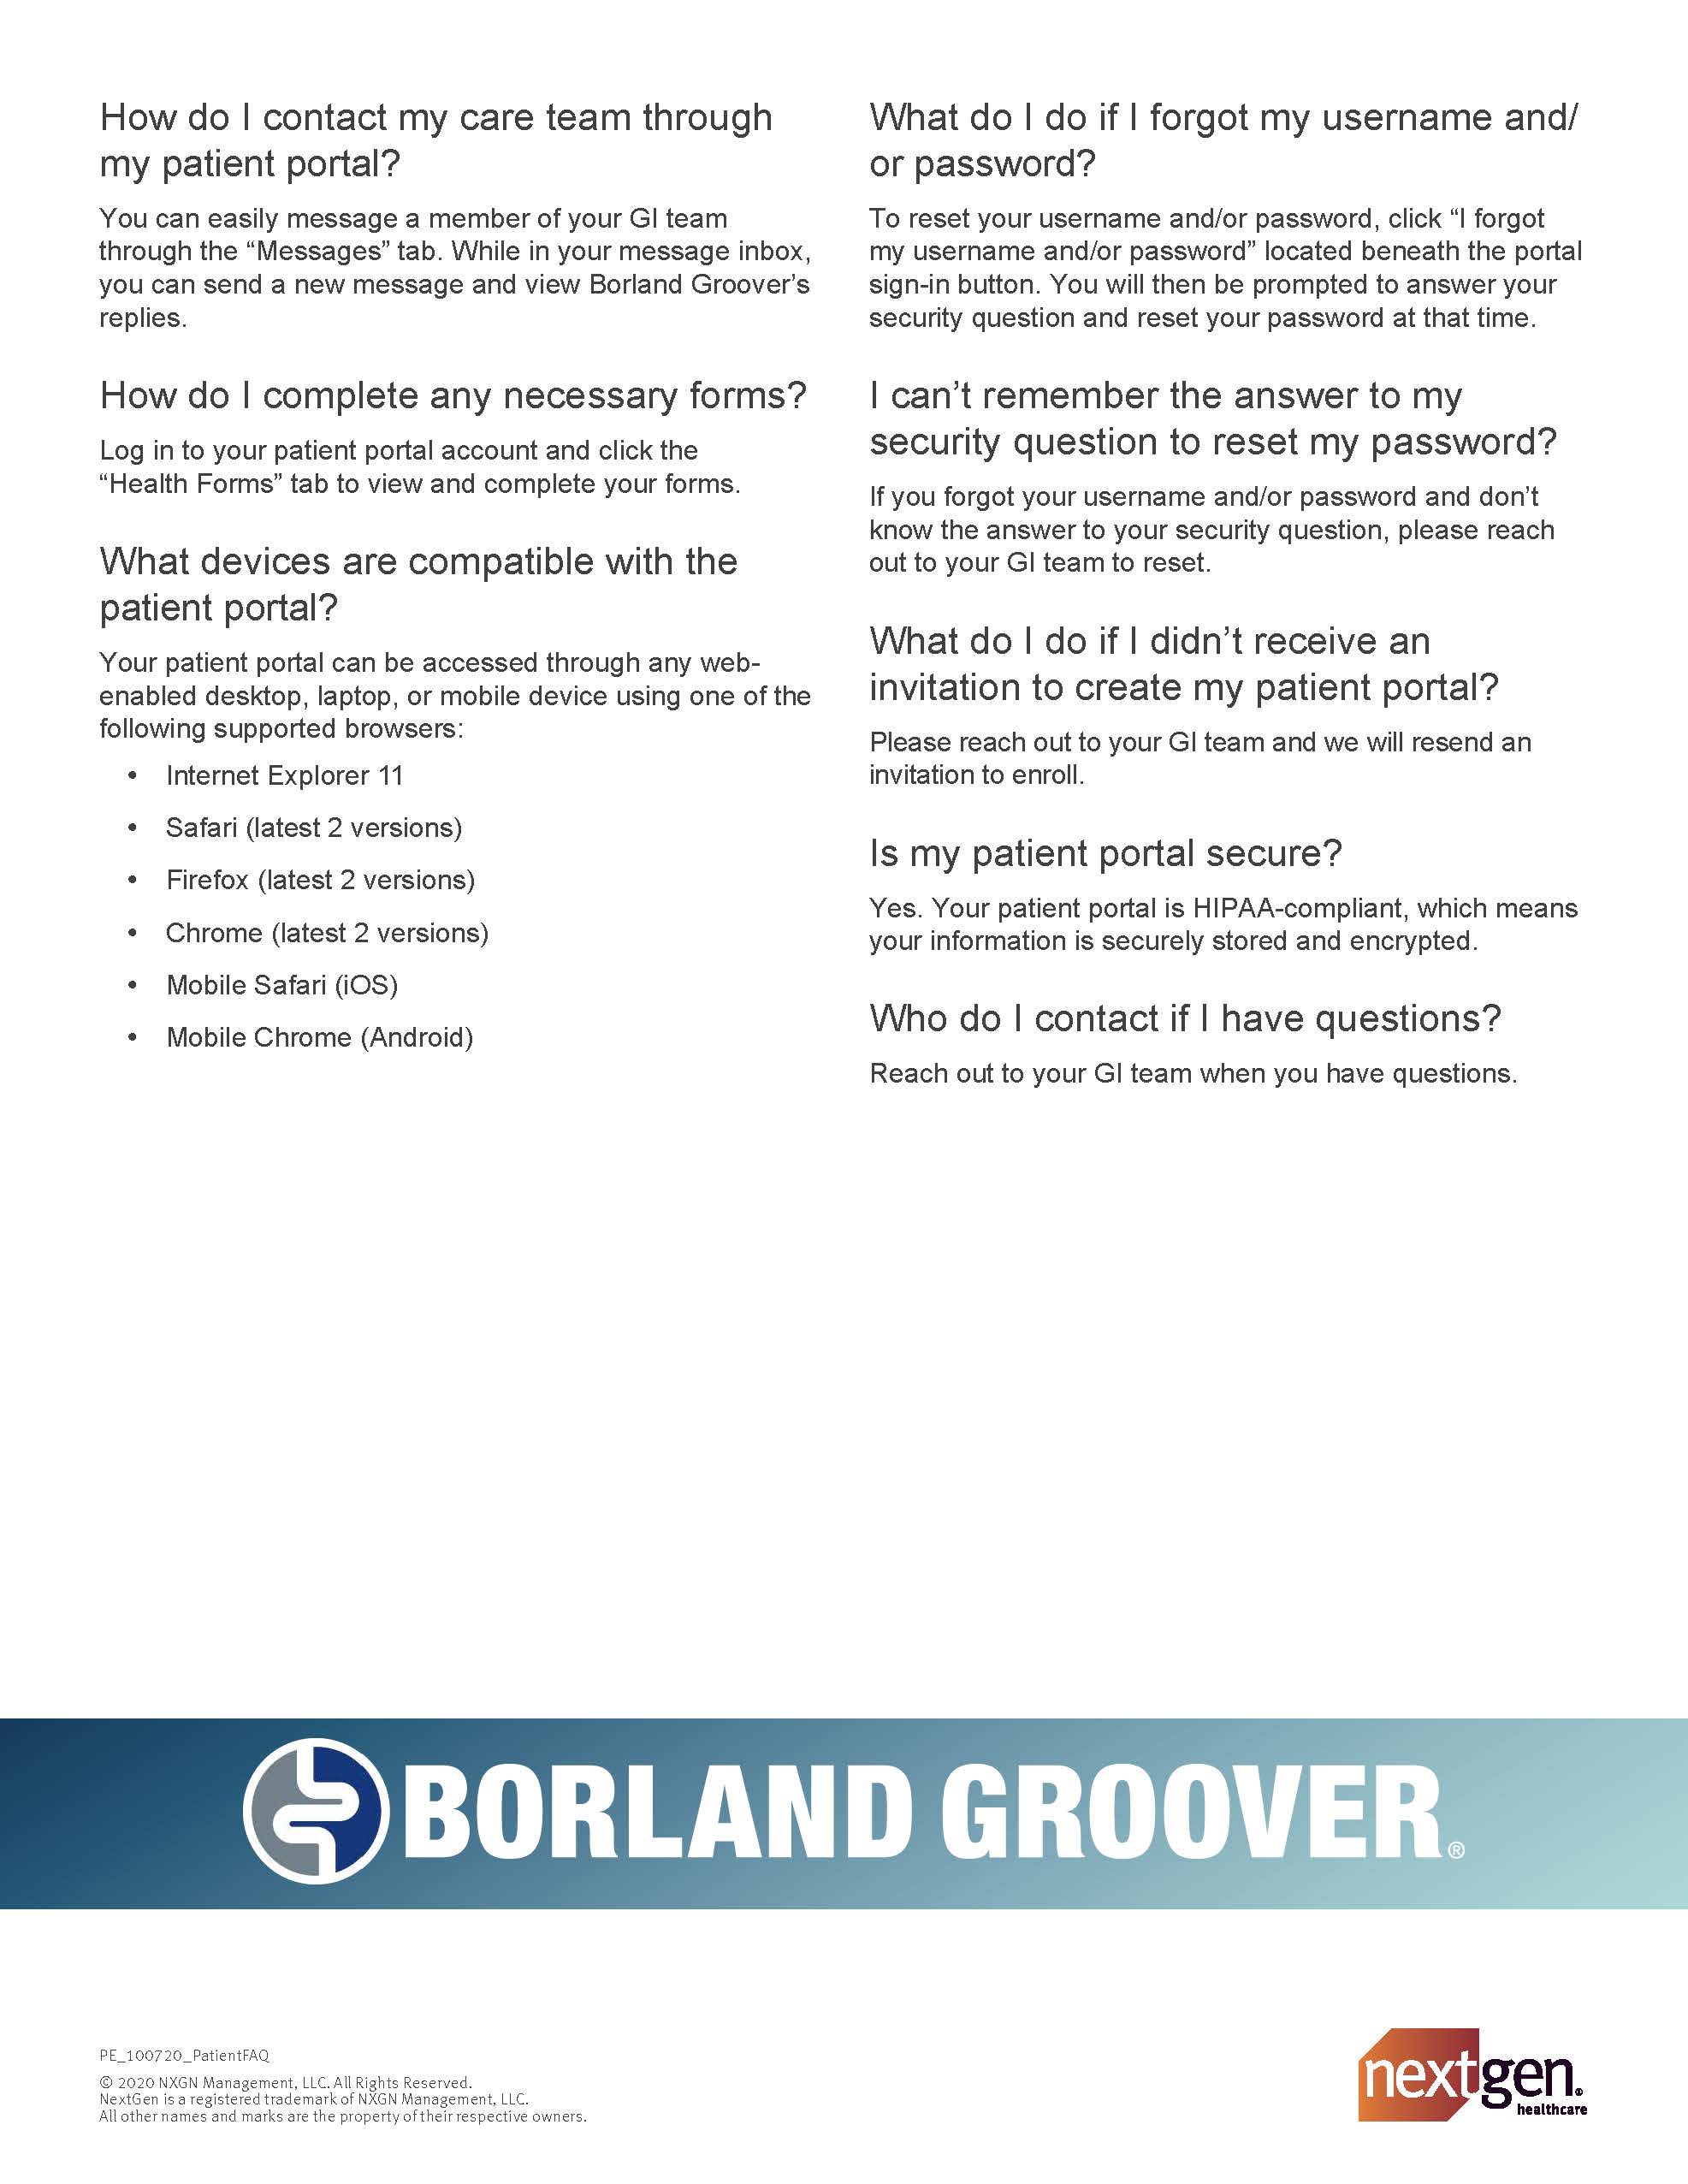 Borland Groover Patient Portal FAQ2